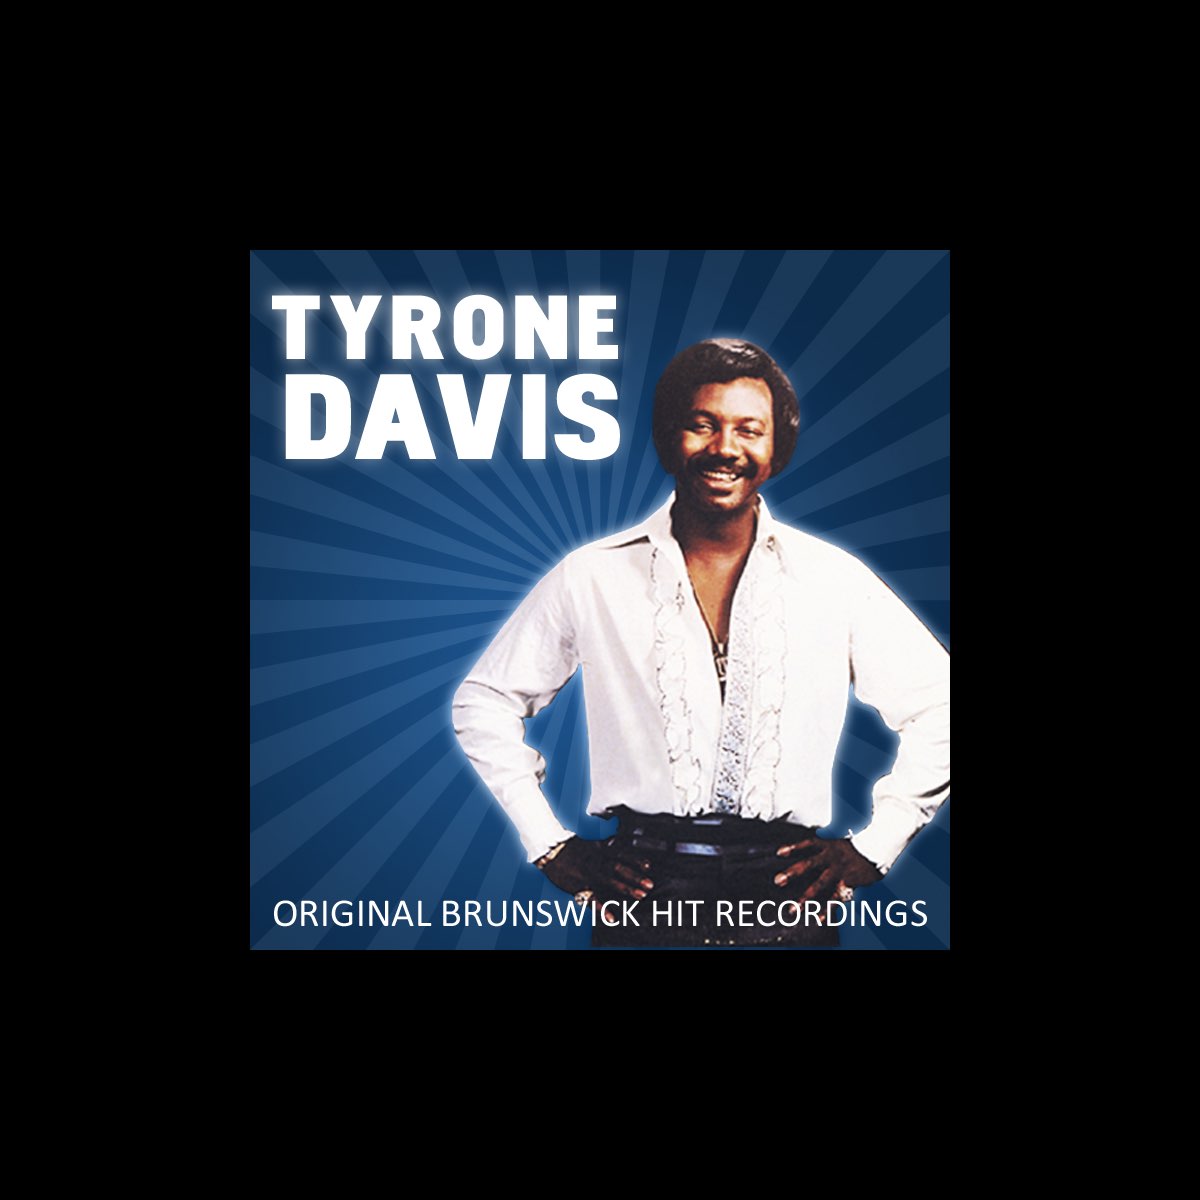 ‎Original Brunswick Hit Recordings by Tyrone Davis on Apple Music